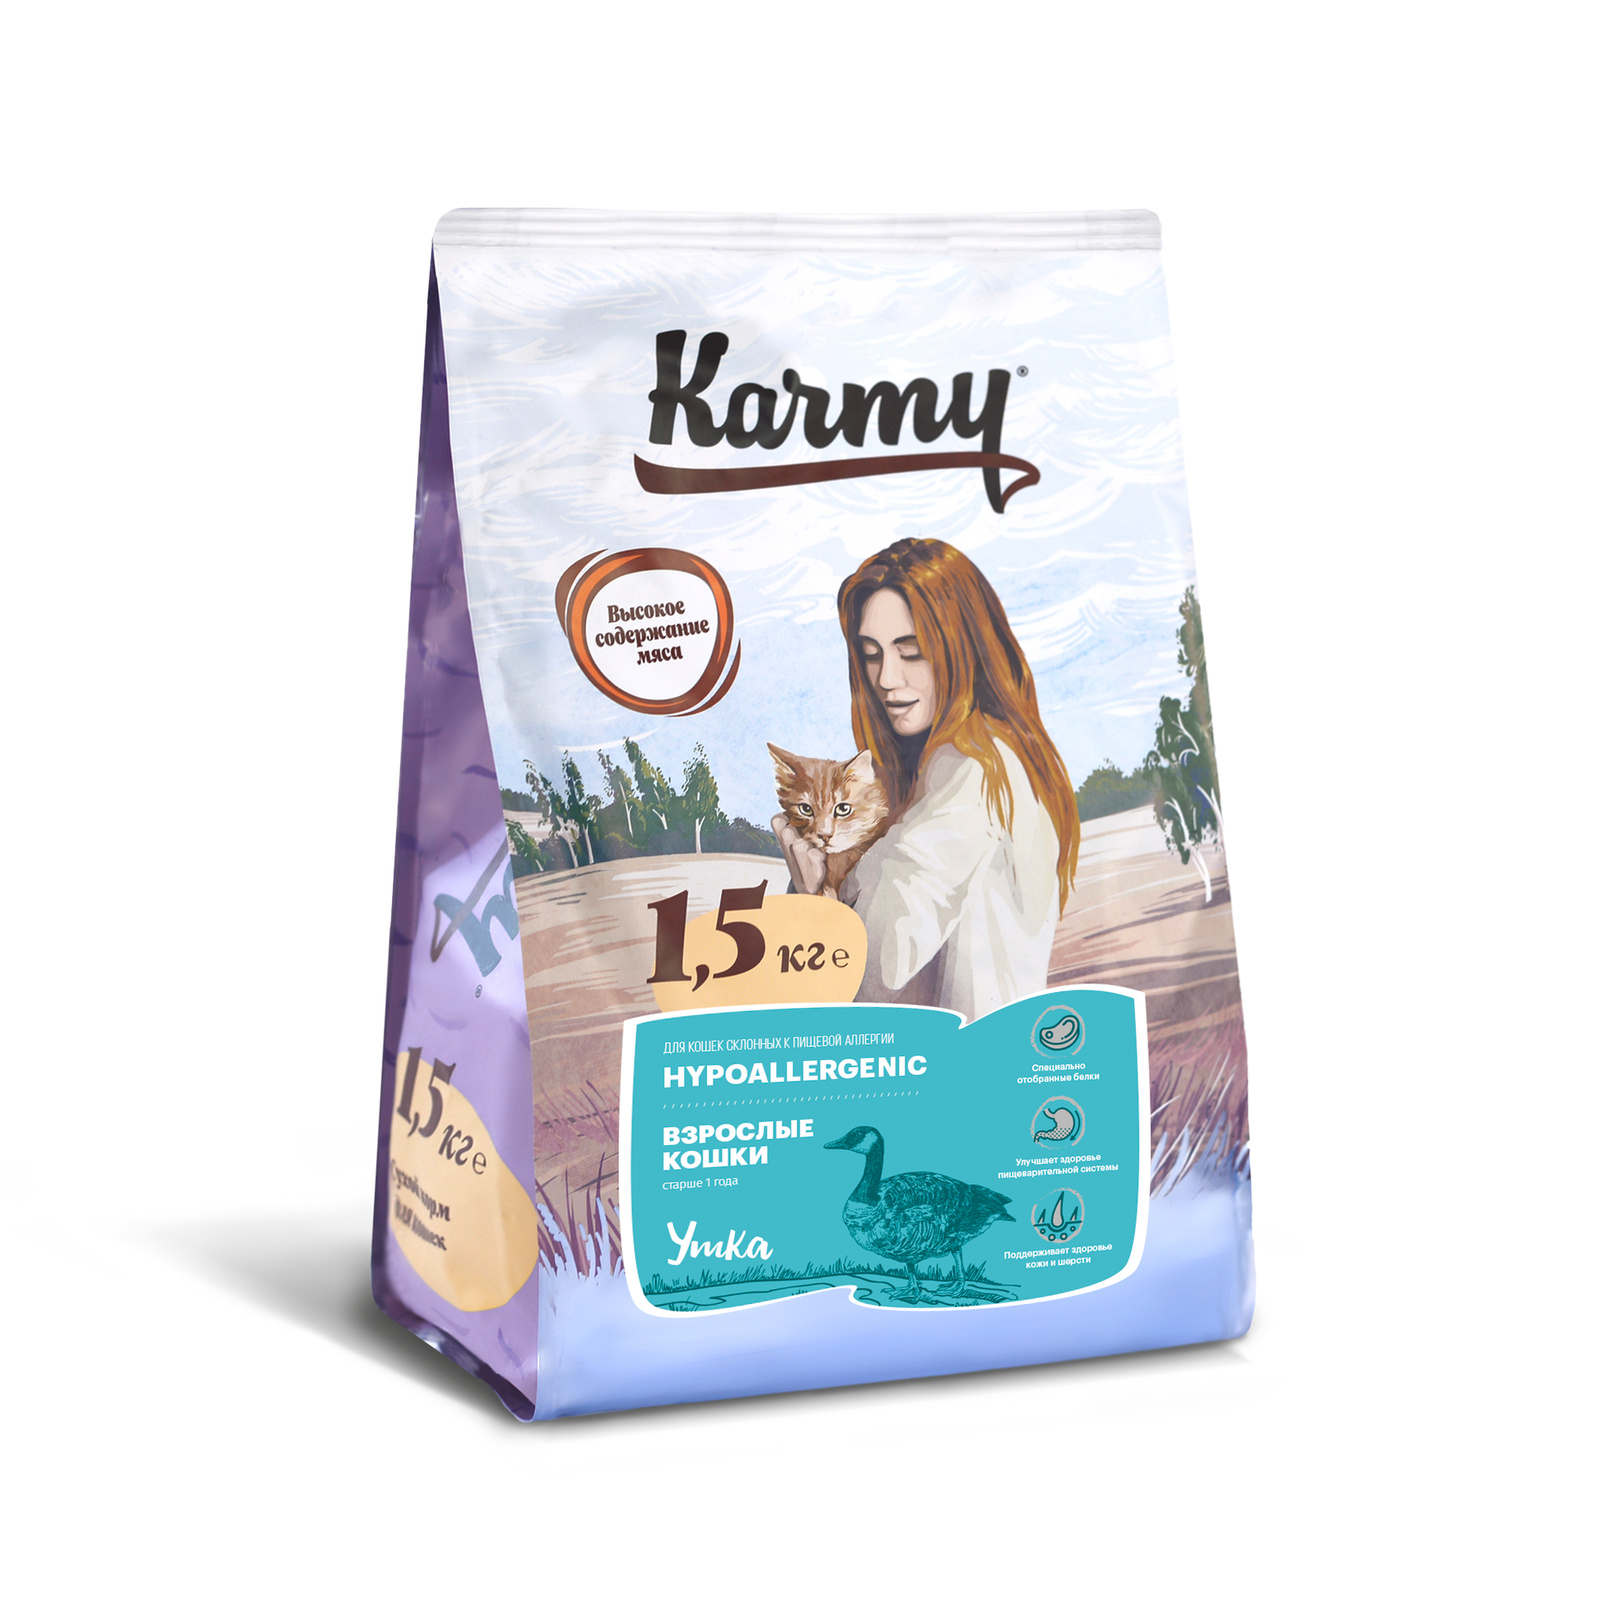 Karmy Корм Karmy сухой корм для кошек, склонных к пищевой аллергии с уткой (1,5 кг) karmy hypoallergenic полнорационный сухой корм для кошек при пищевой аллергии c уткой